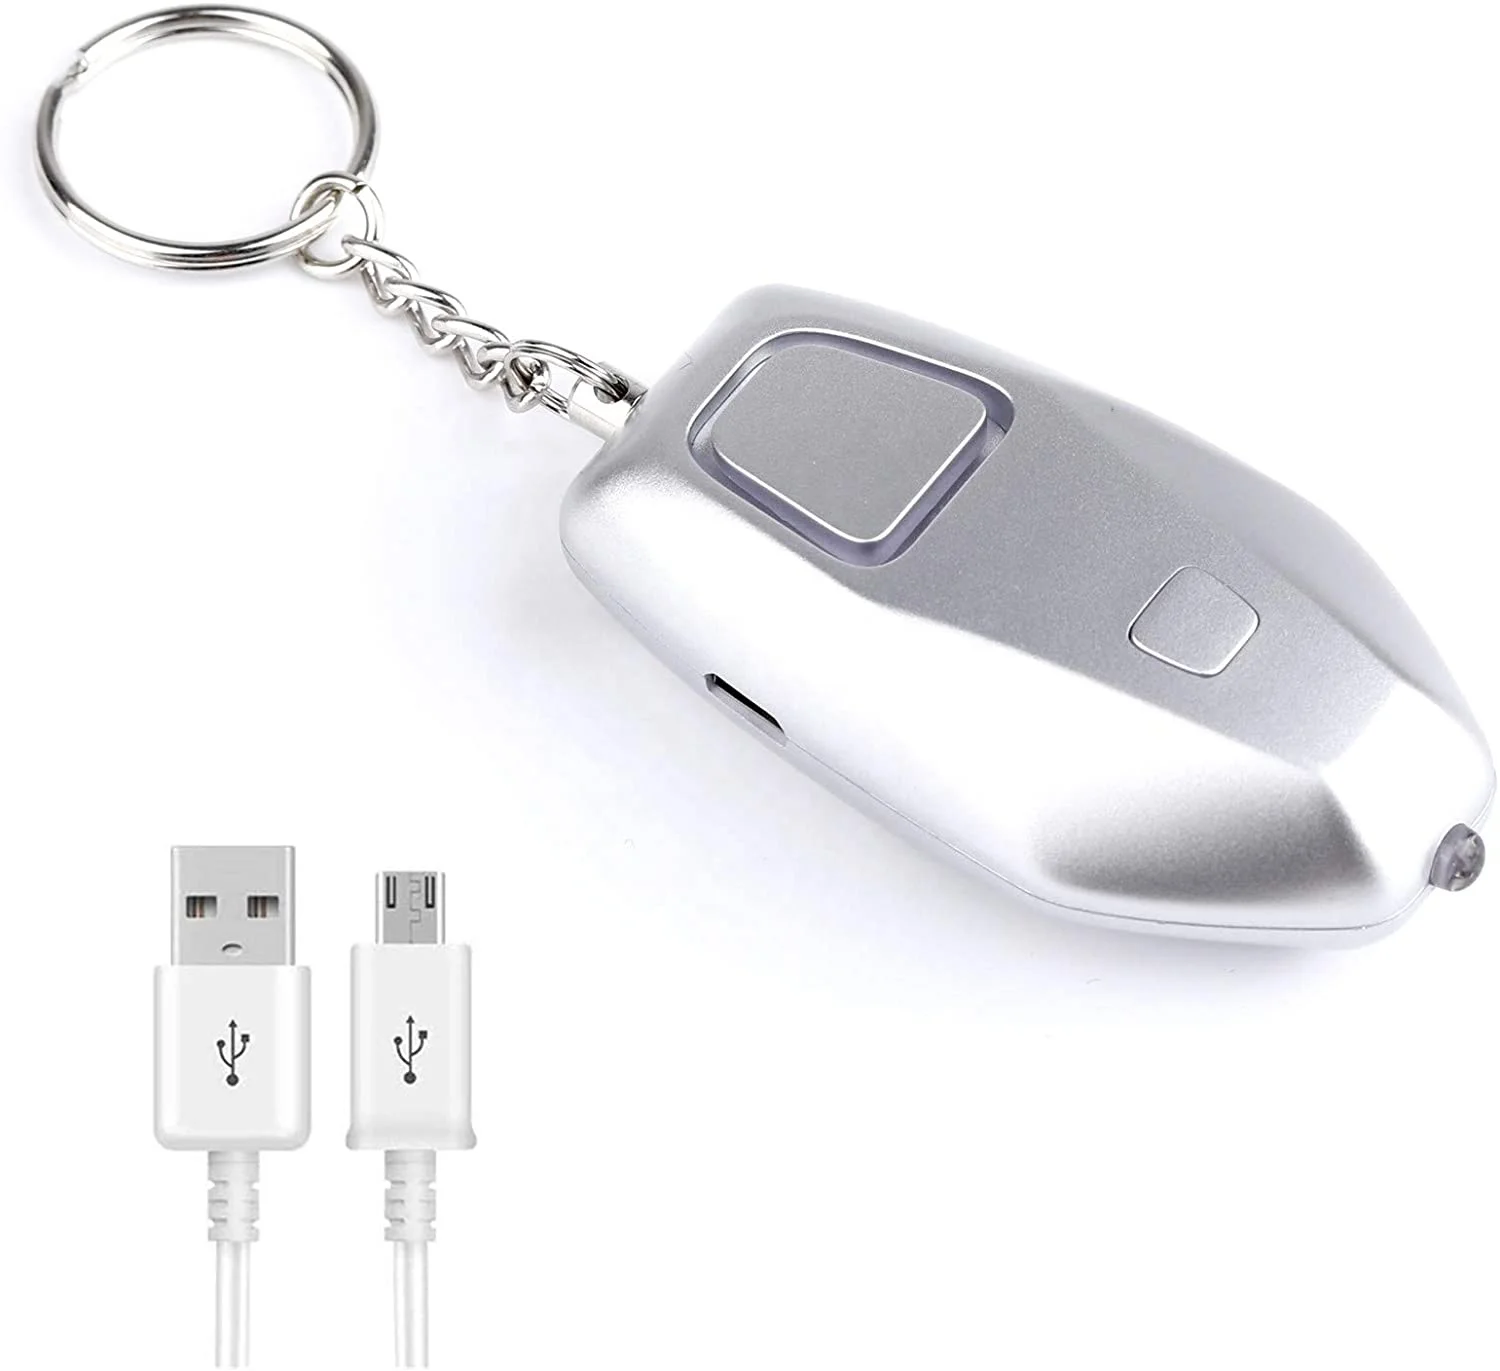 New Design USB Rechargeable Emergency Personal Alarm Keychain Self Defense Alarm for Women Elderly Kids Girls